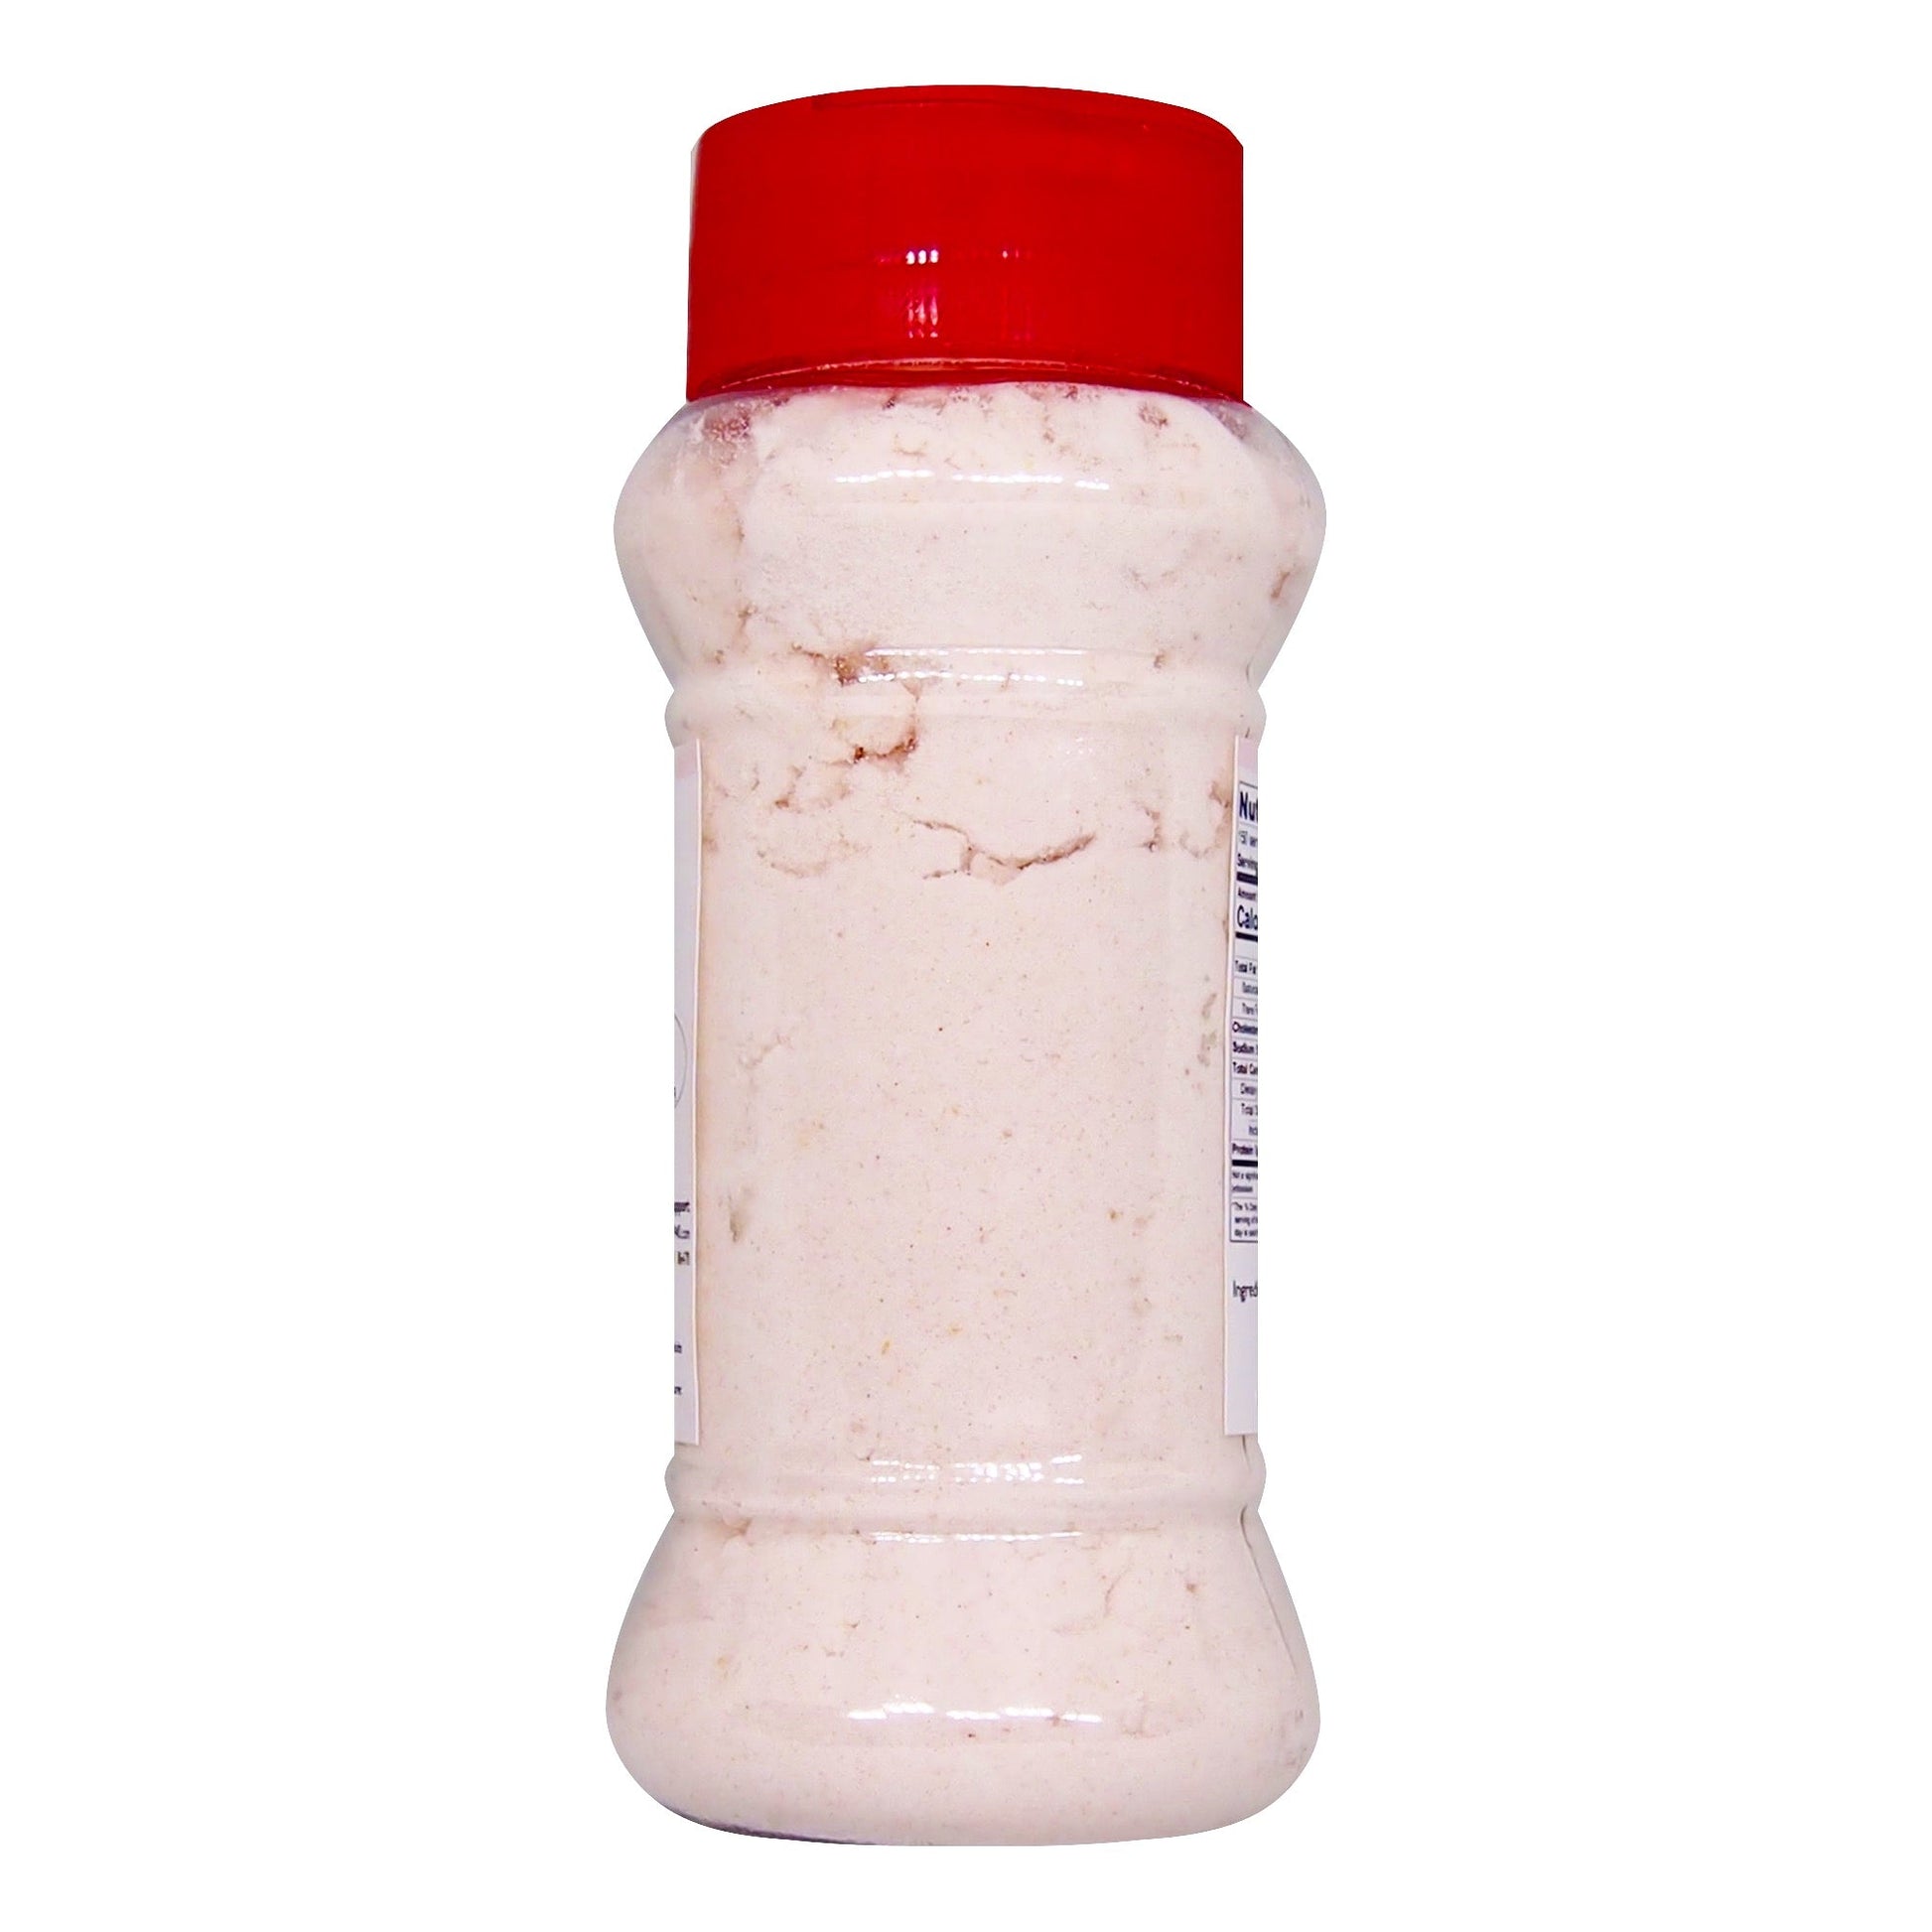 Himalayan Rock Salt Powder 150g - Tassyam Organics